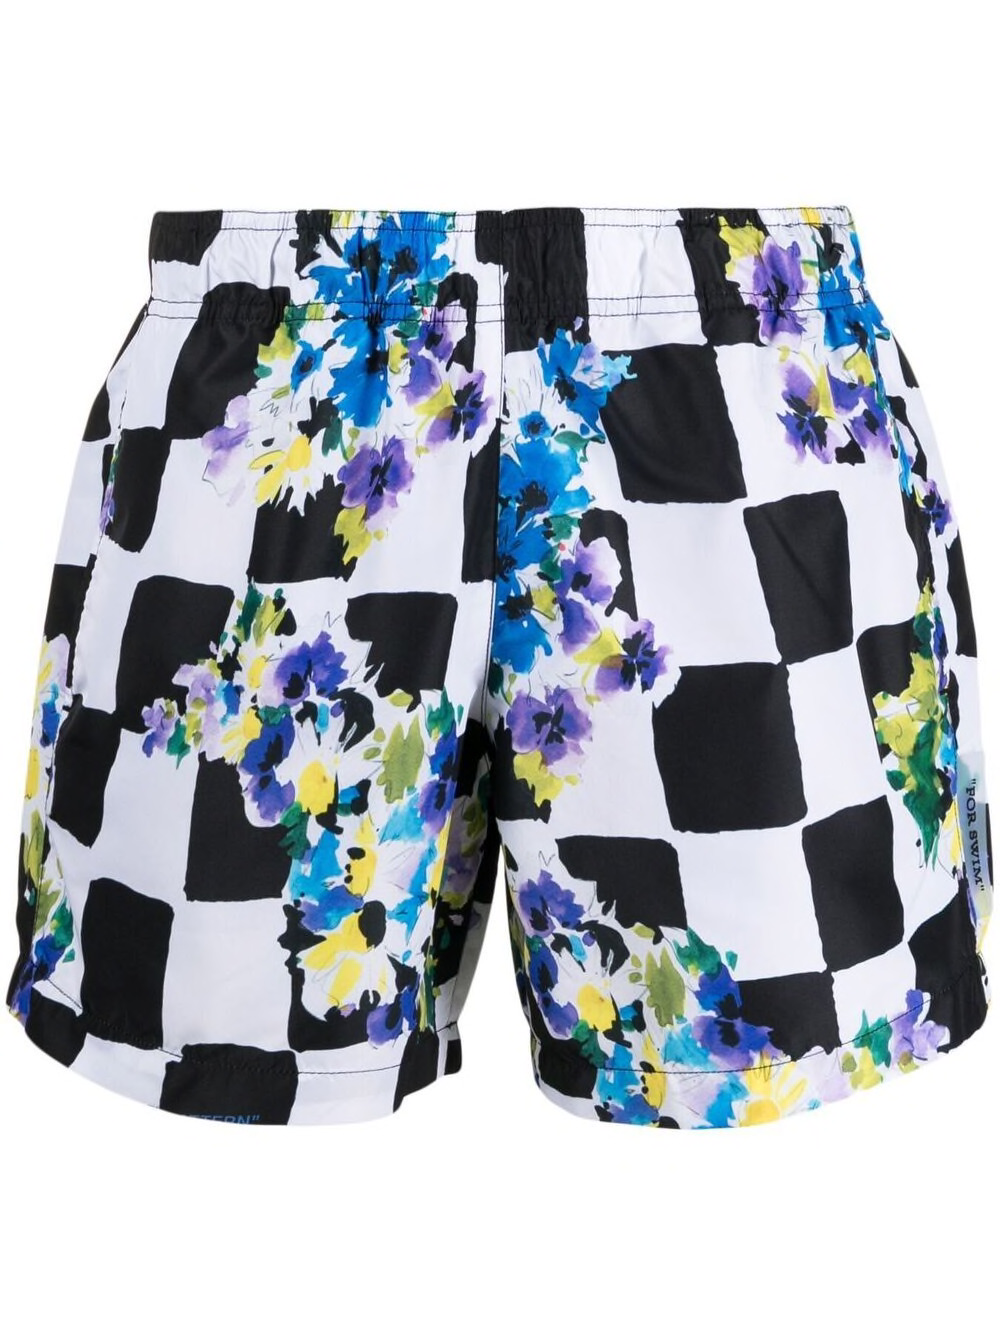 OFF-WHITE Floral-Print Checked Swim Shorts Black/White-Multi Men's